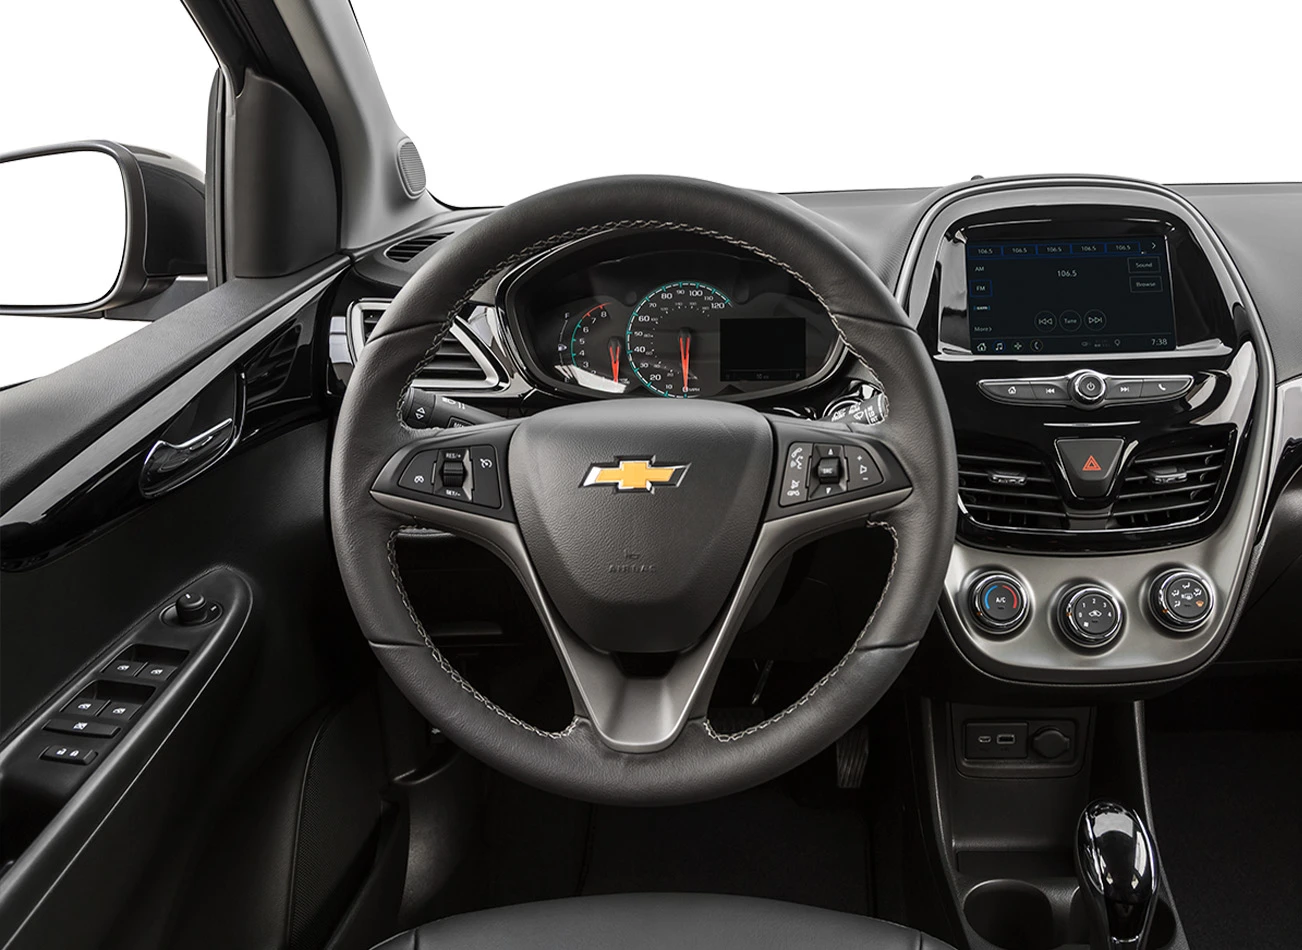 2020 Chevrolet Spark: Steering wheel and display screen | CarMax